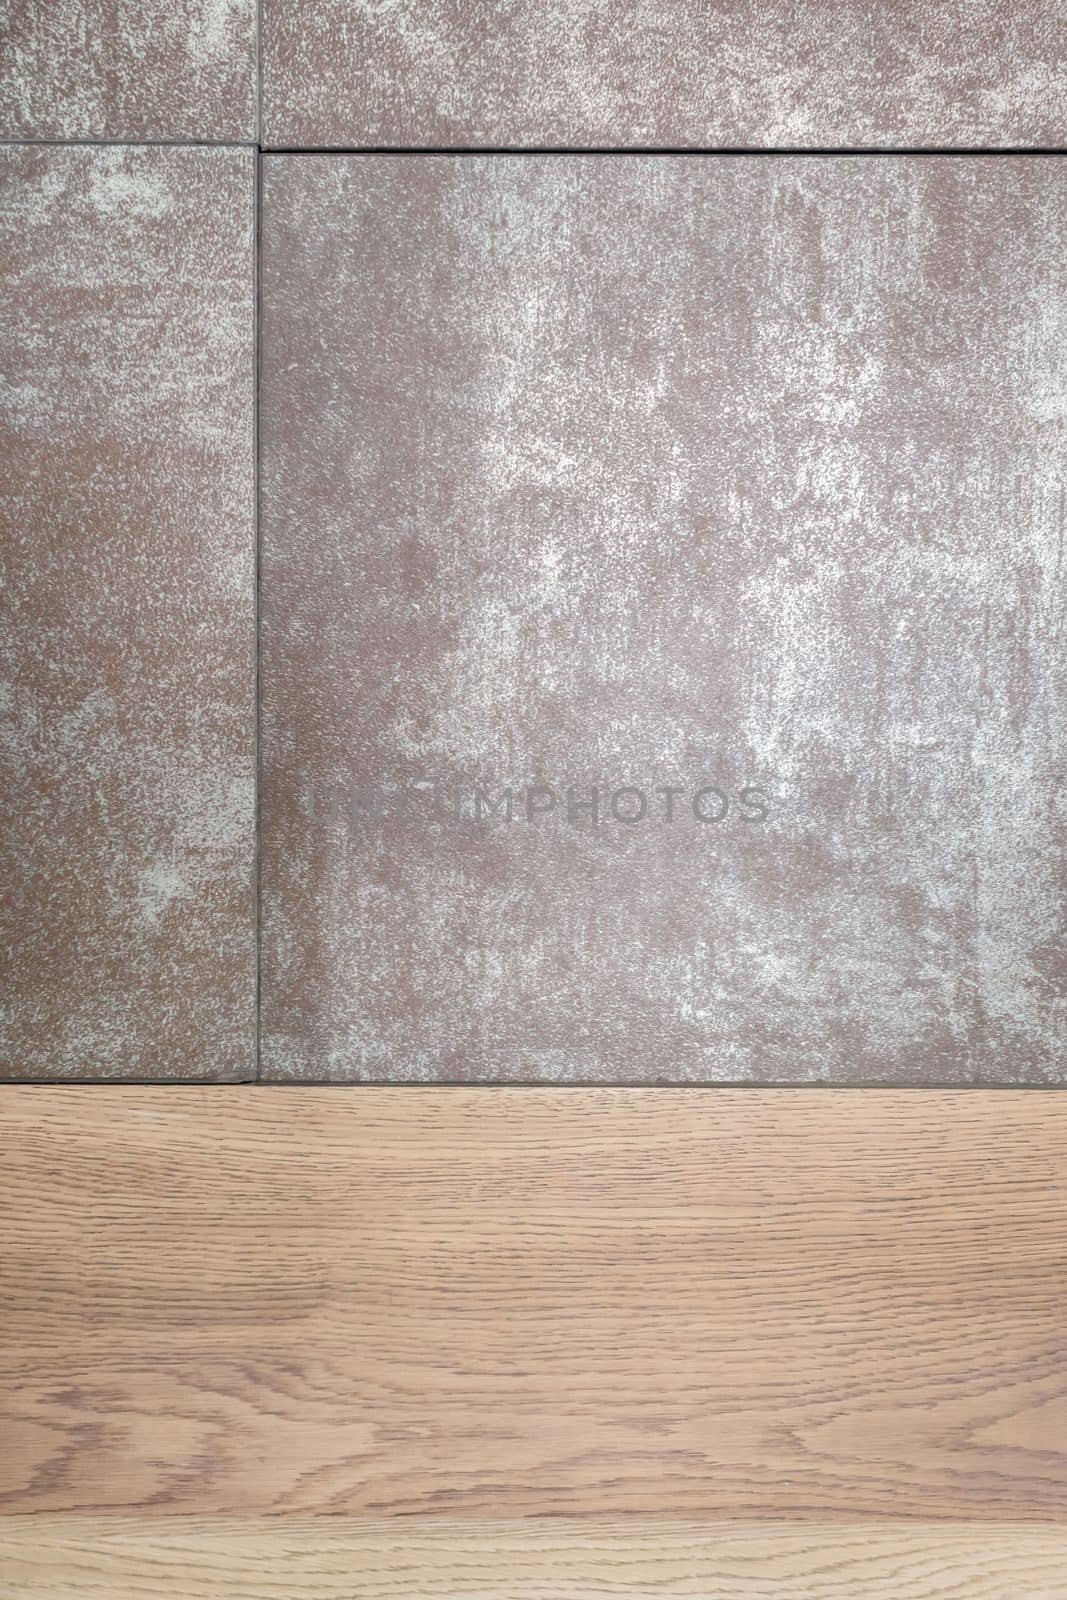 Cement Tile Floor and wood by germanopoli